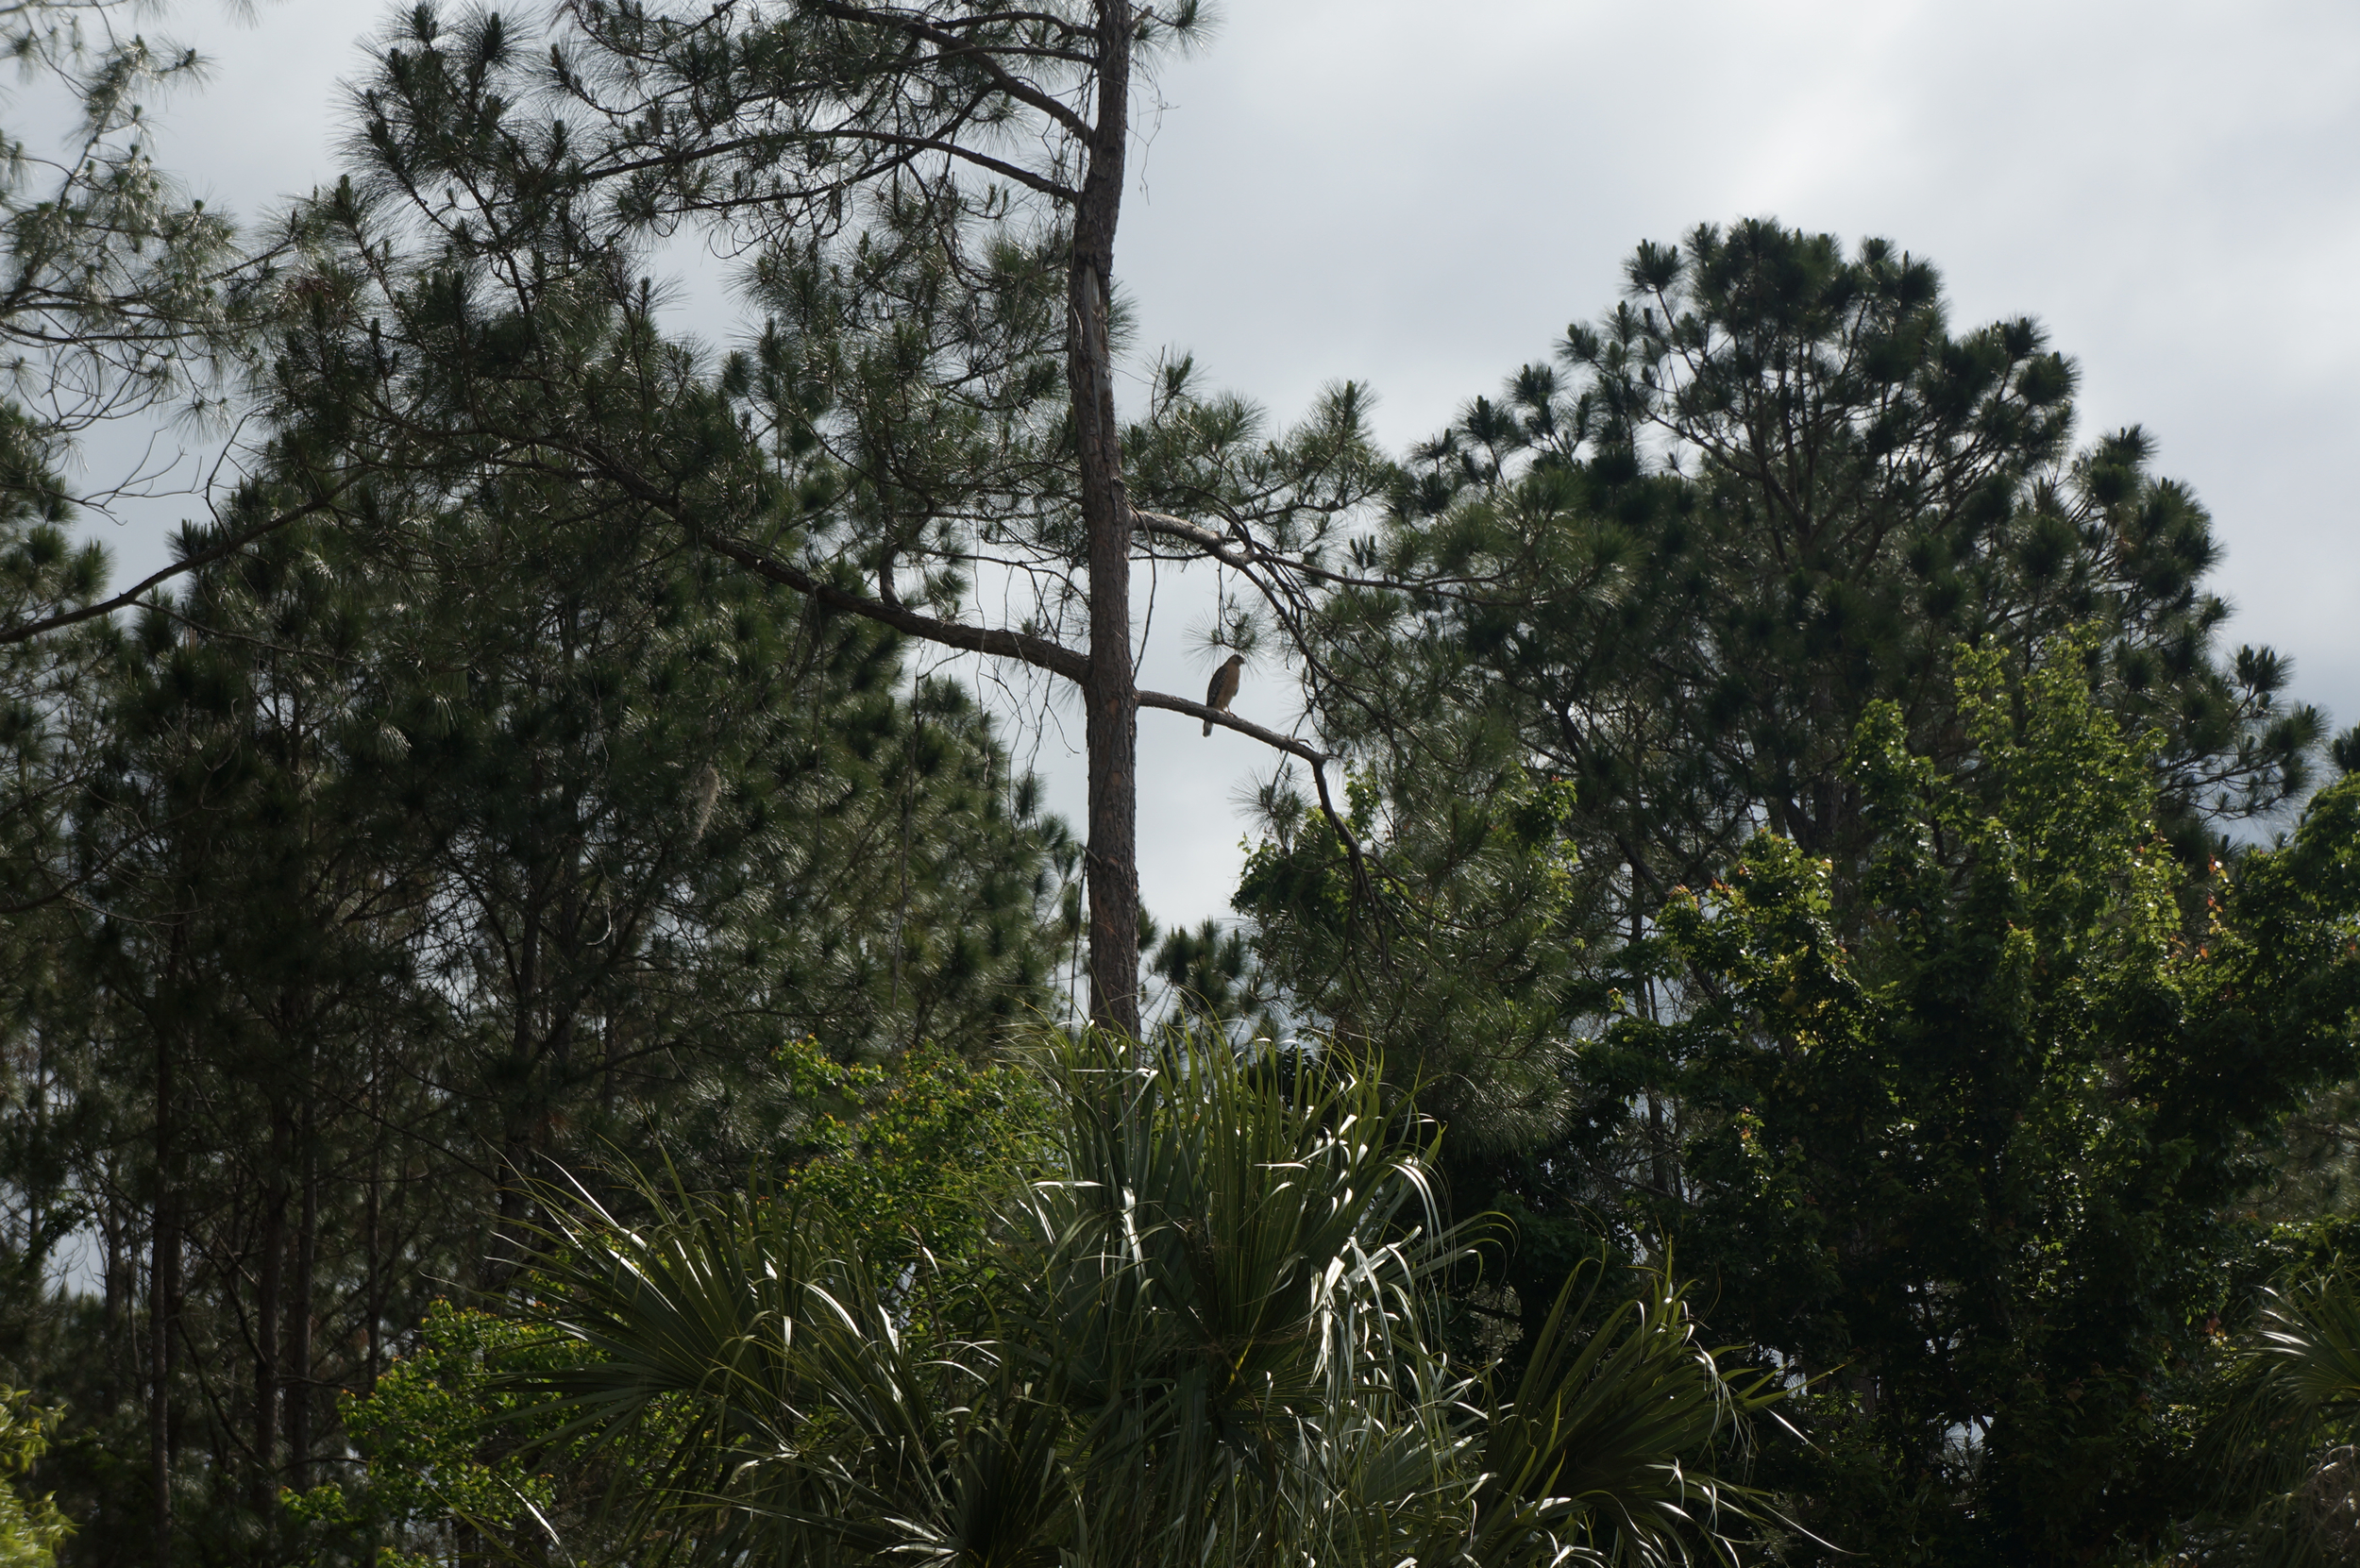 Osprey in tree